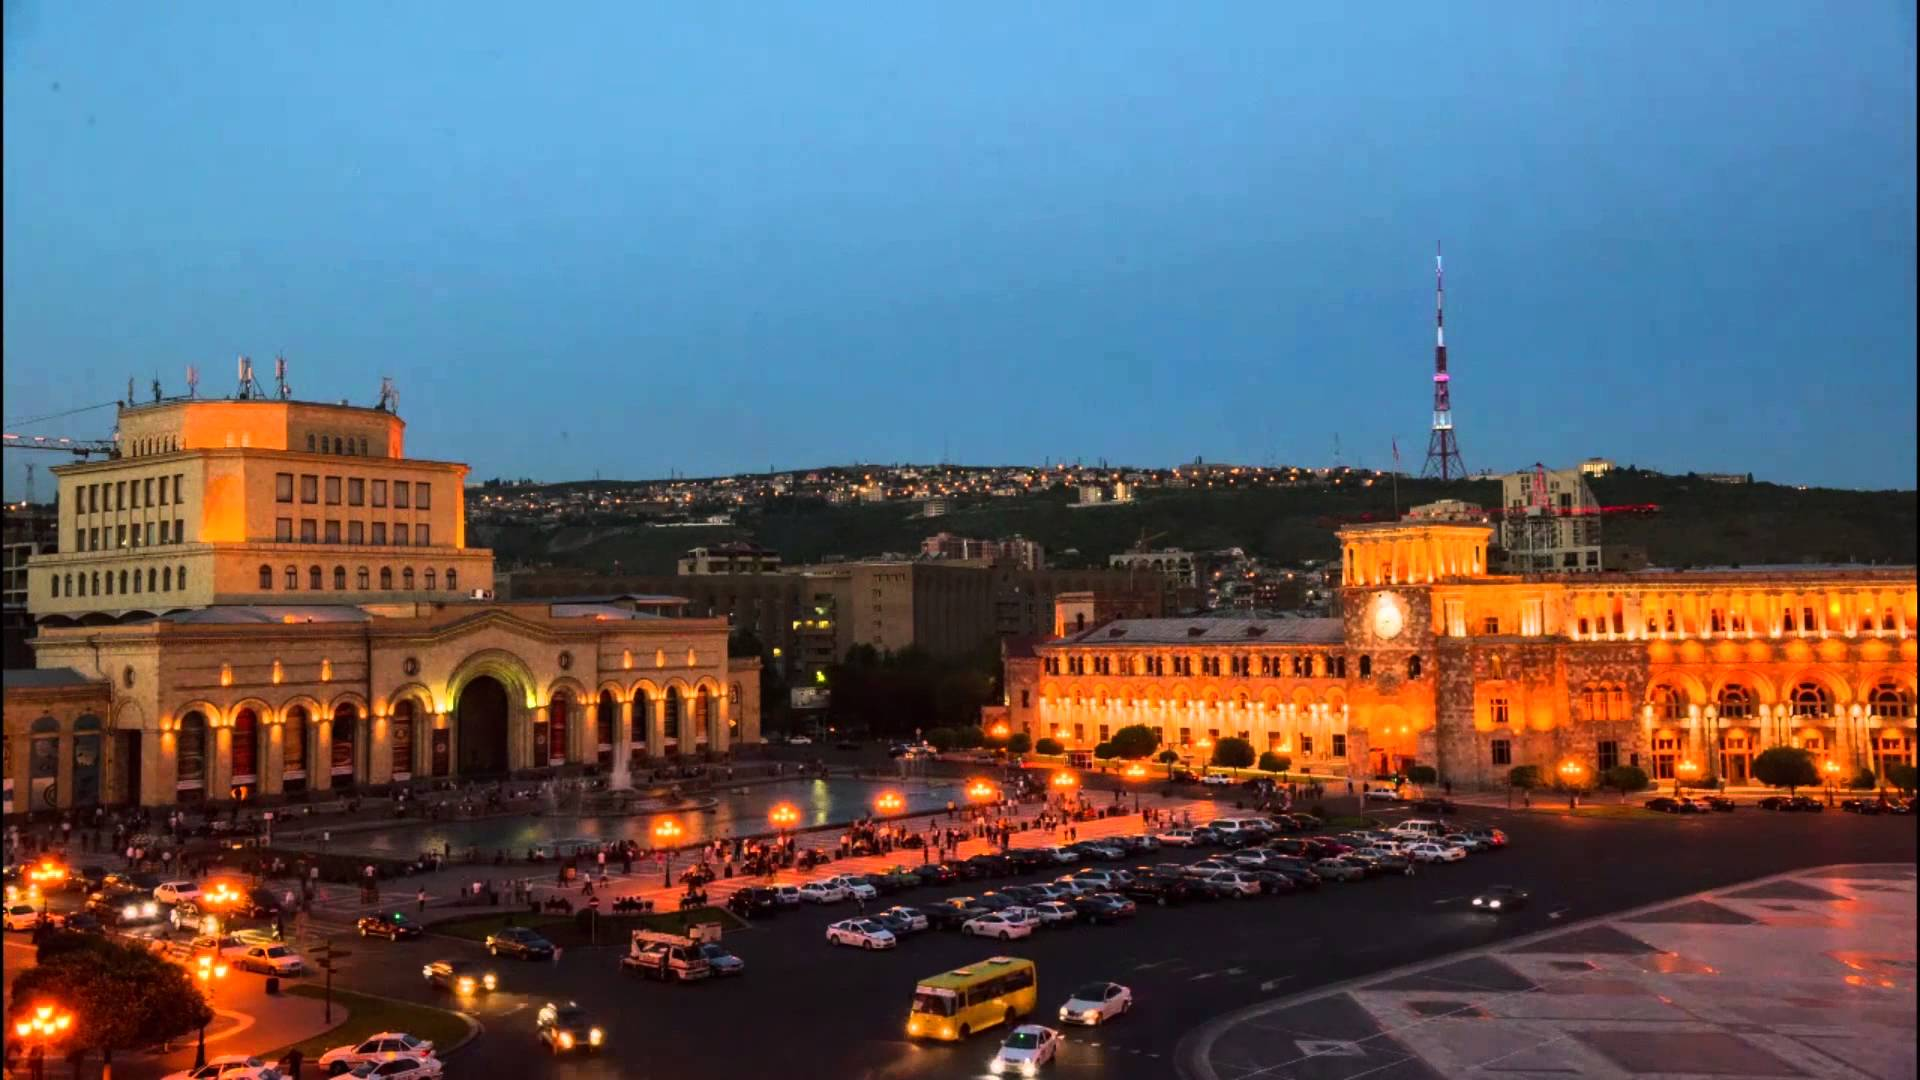 Прилети ереван. Площадь Республики Ереван. Площадь революции Ереван. Армения Ереван площадь Республики. Площадь независимости Ереван.